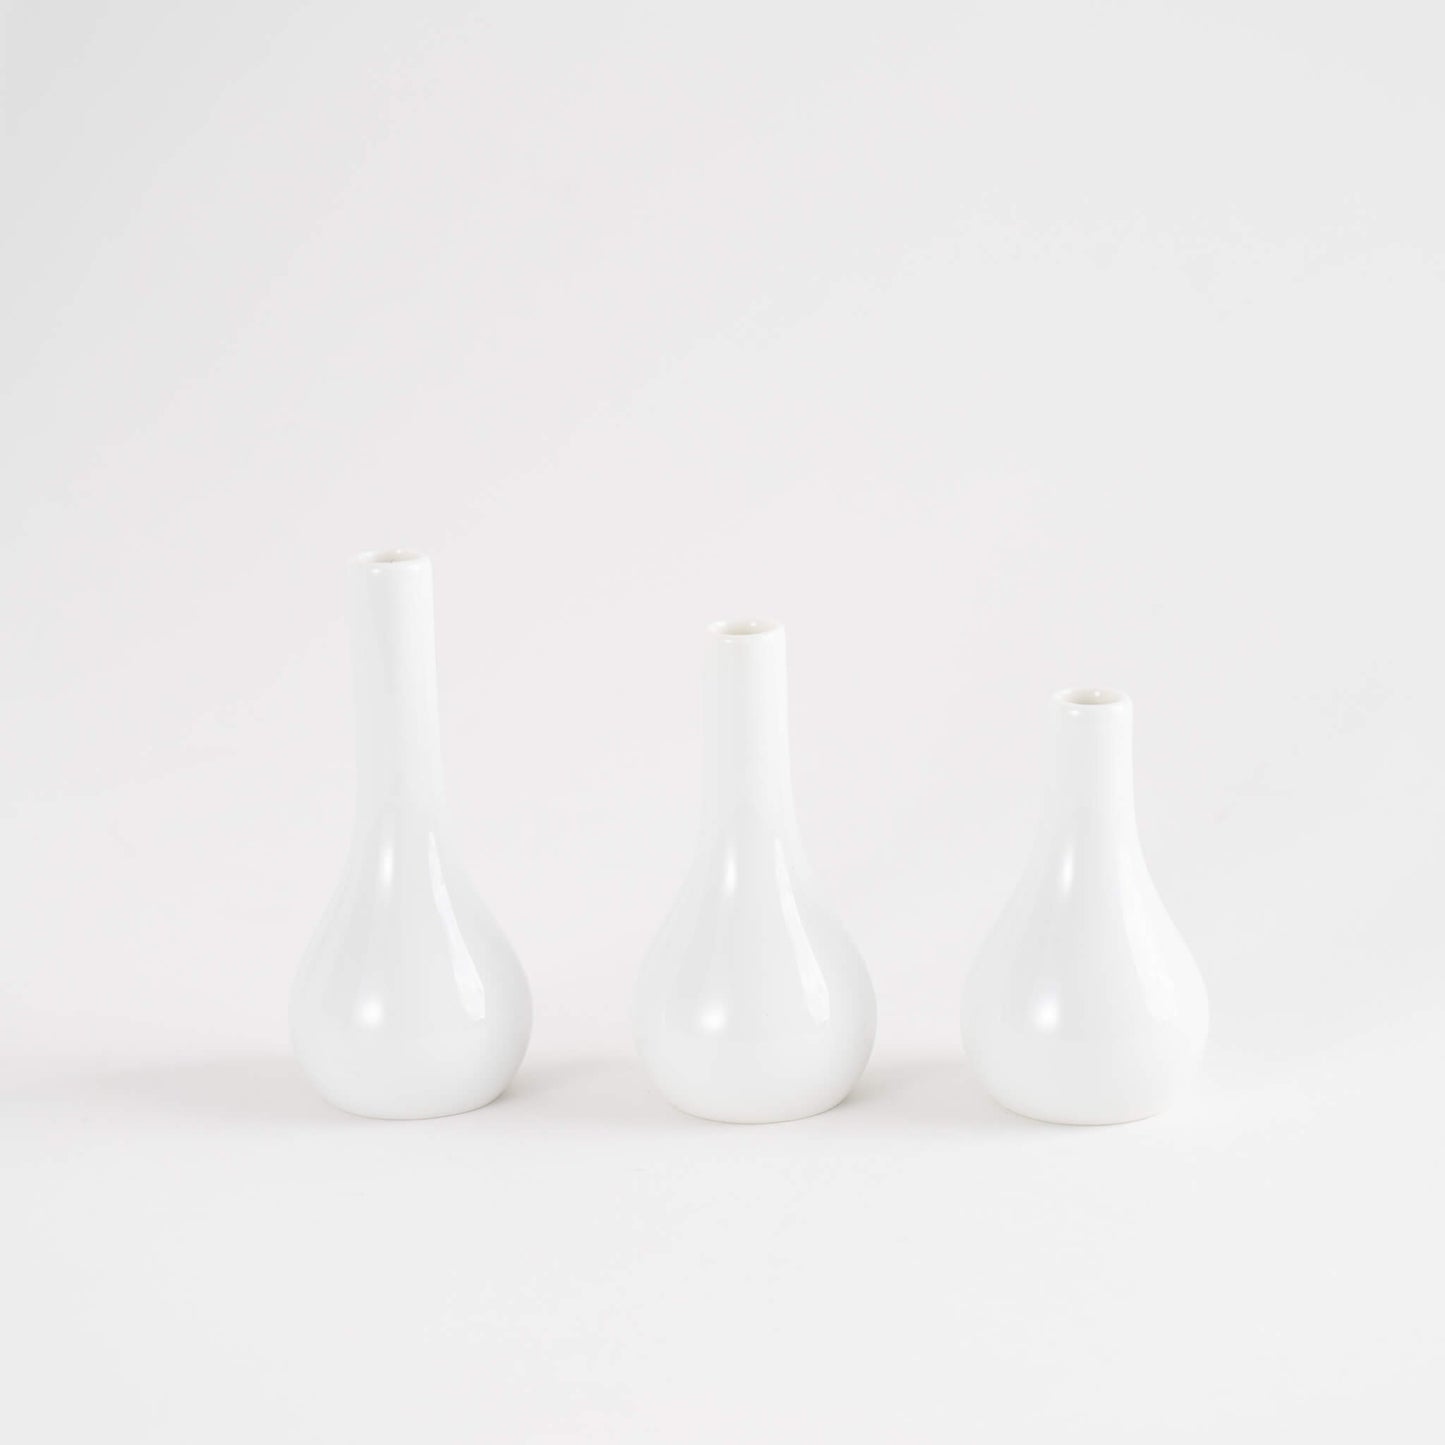 Vintage White Porcelain Fitz and Floyd Bud Vases - Set of 3